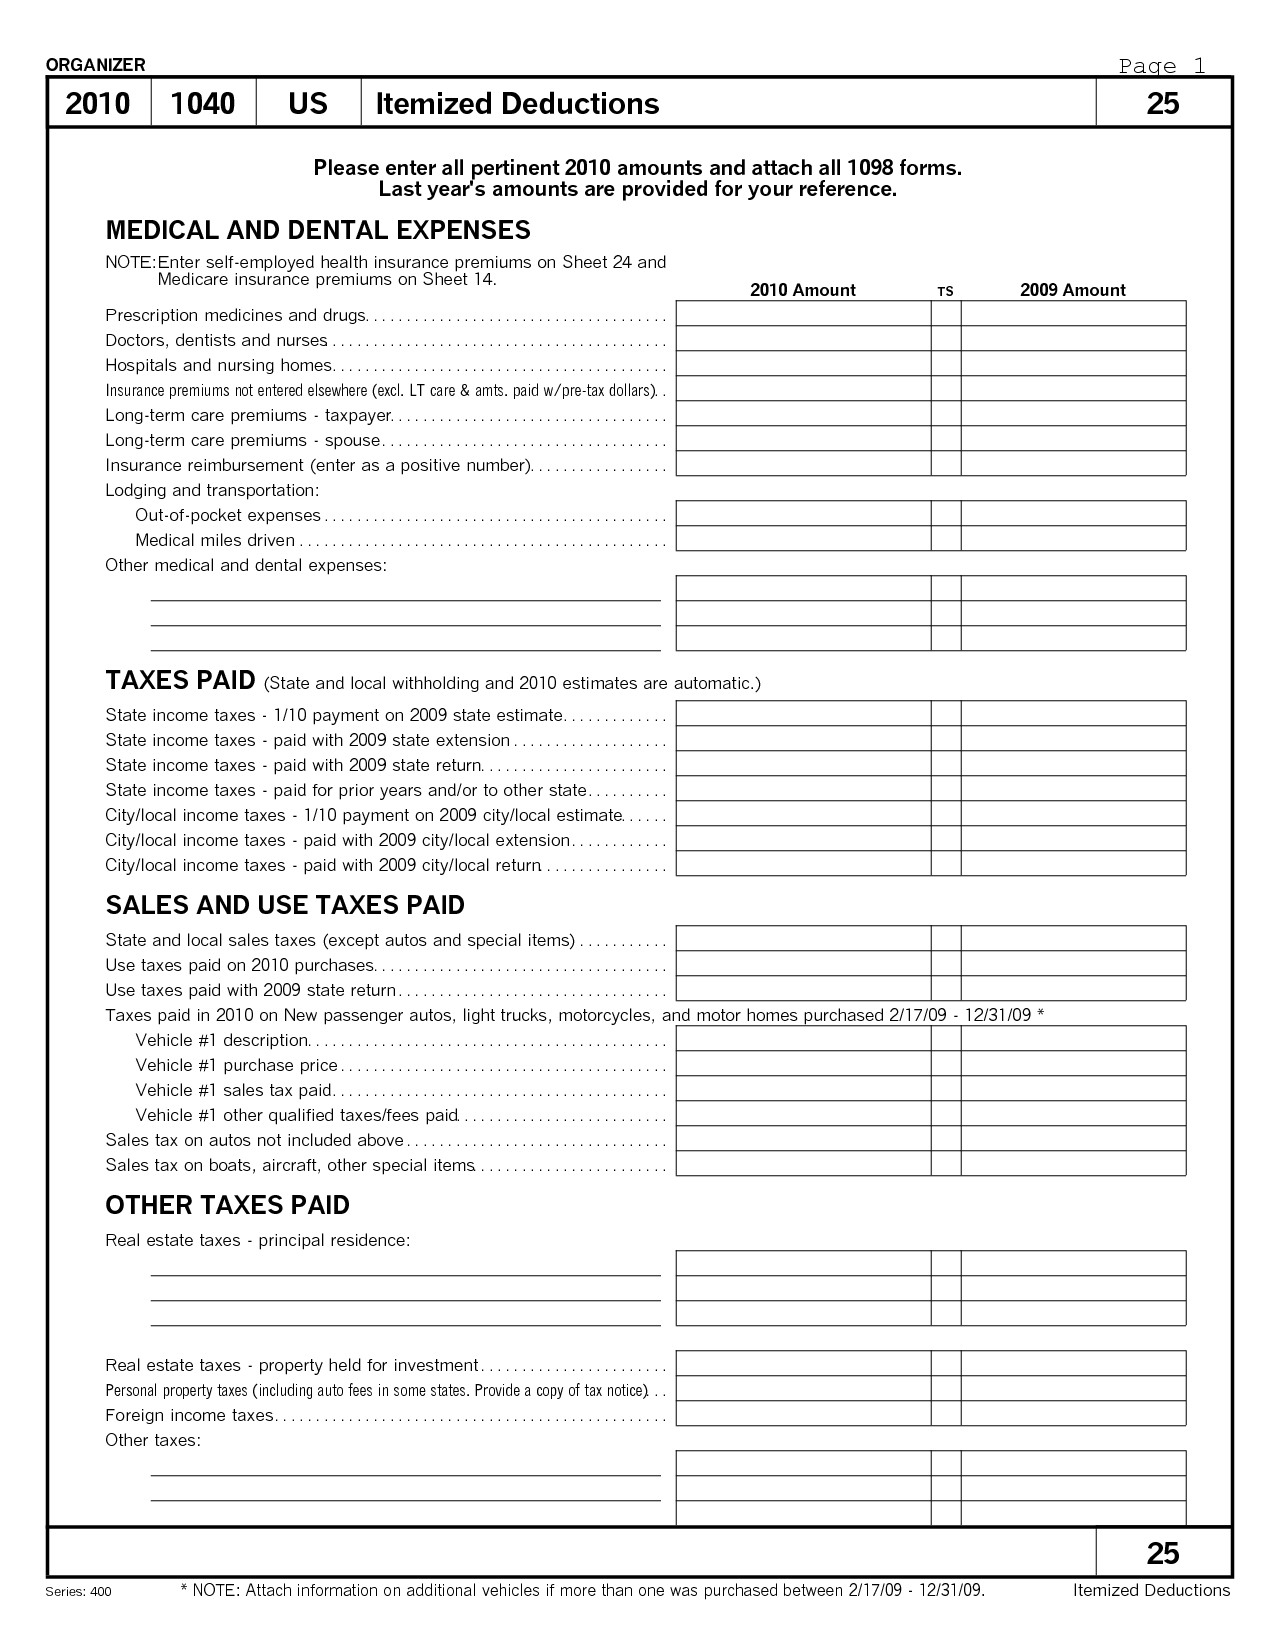 Tax Excel Spreadsheet Spreadsheet Downloa tax excel sheet